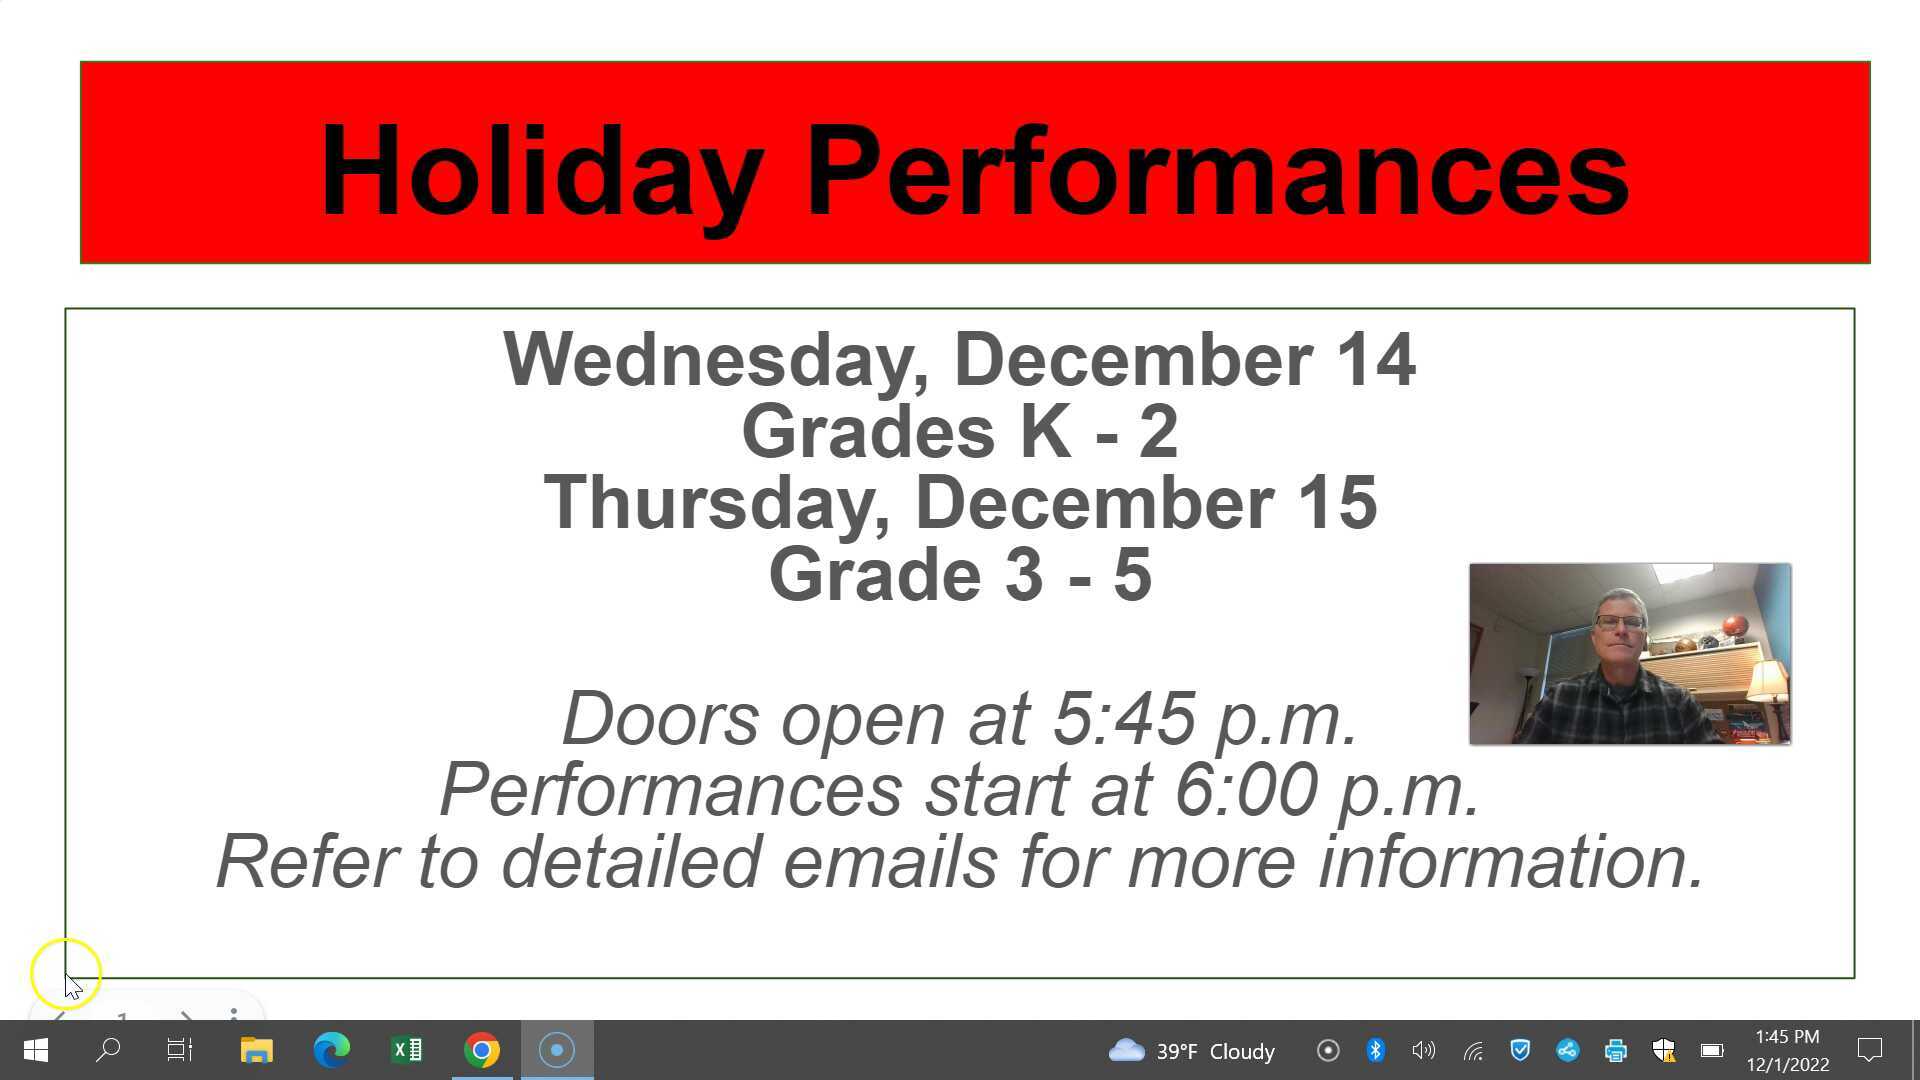 Holiday Performances